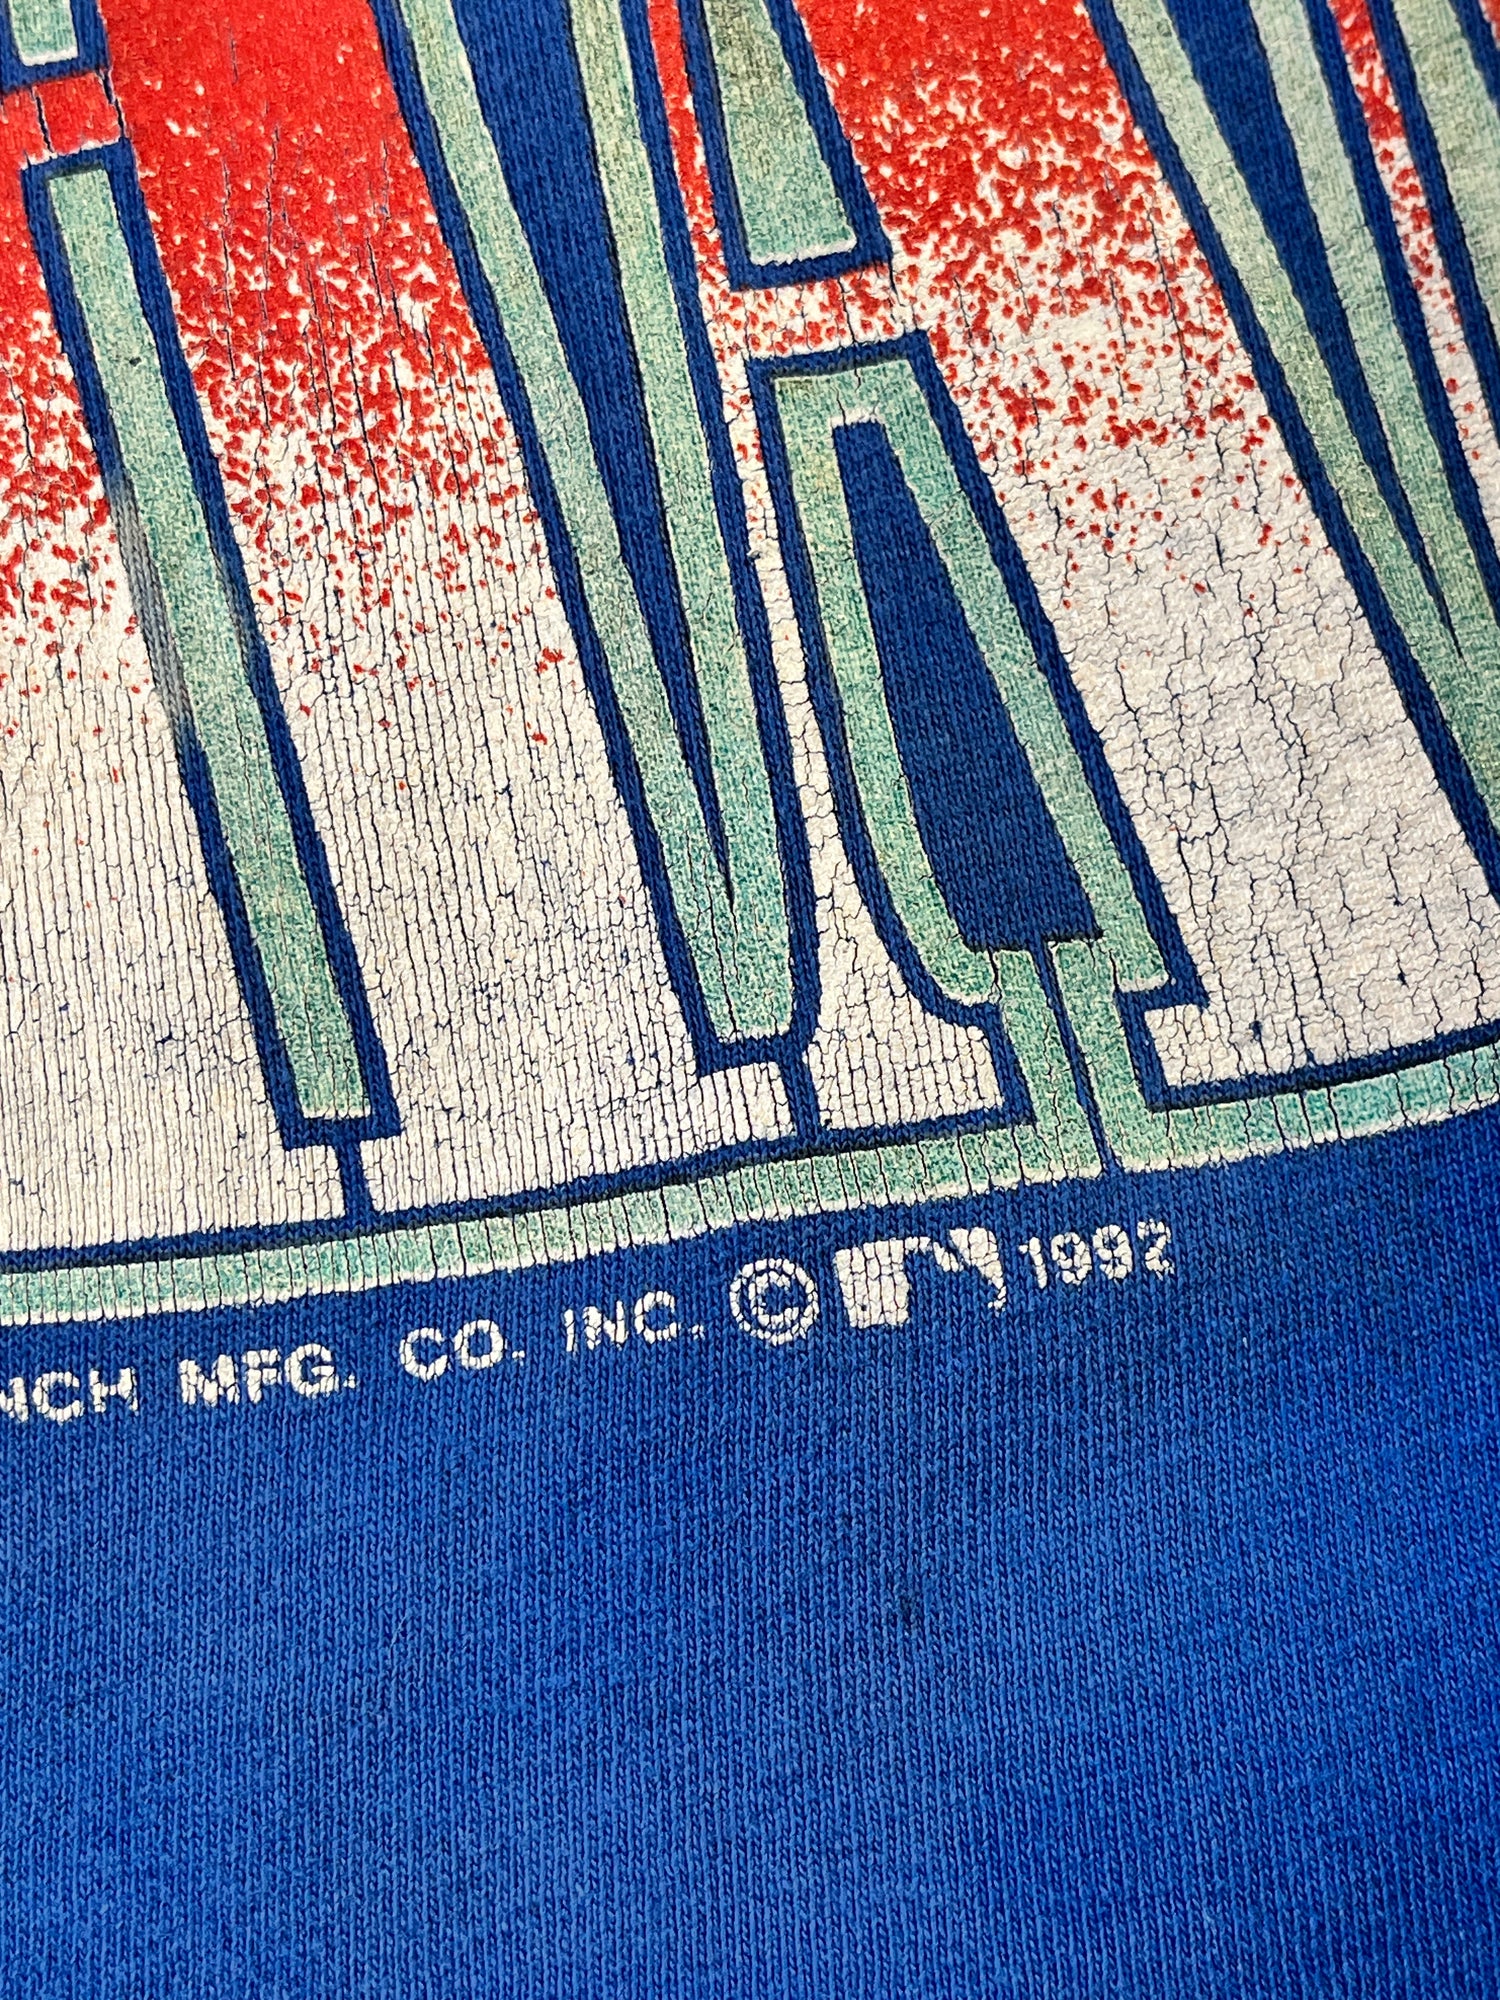 Glorydays Fine Goods Vintage Toronto Blue Jays T-Shirt 1992 World Champs MLB USA Made Single Stitch